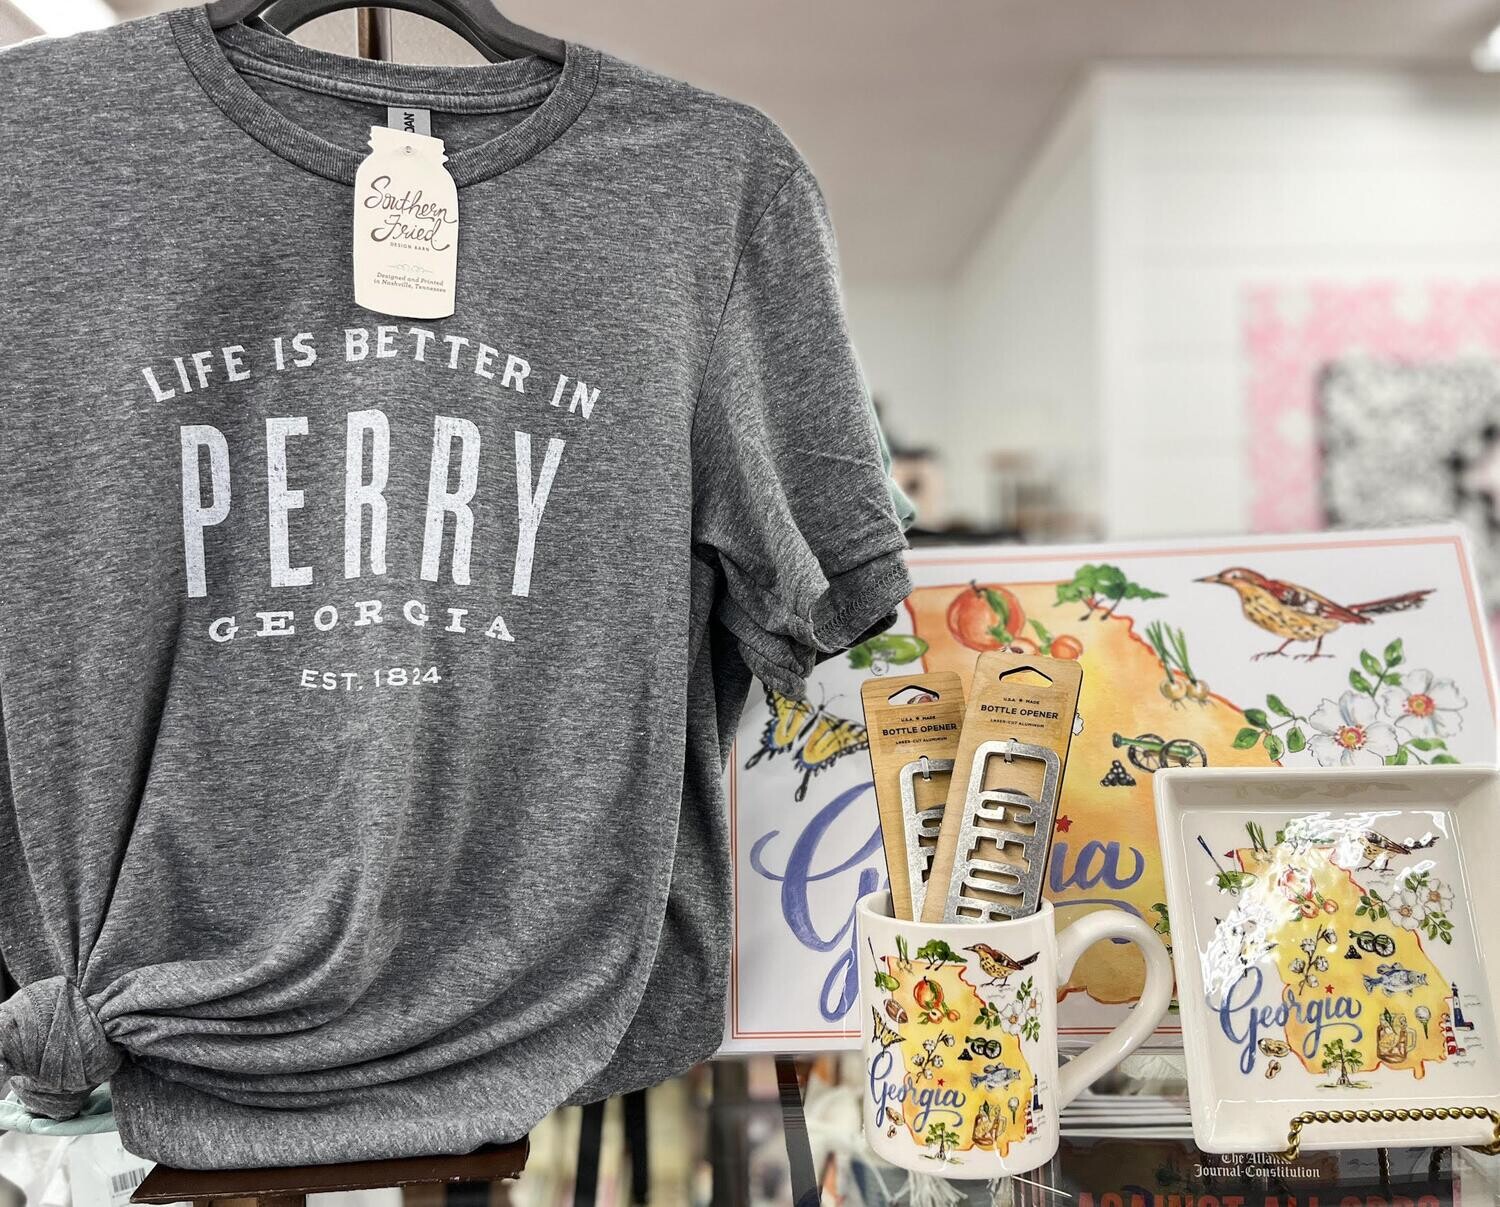 Perry, GA Shirt